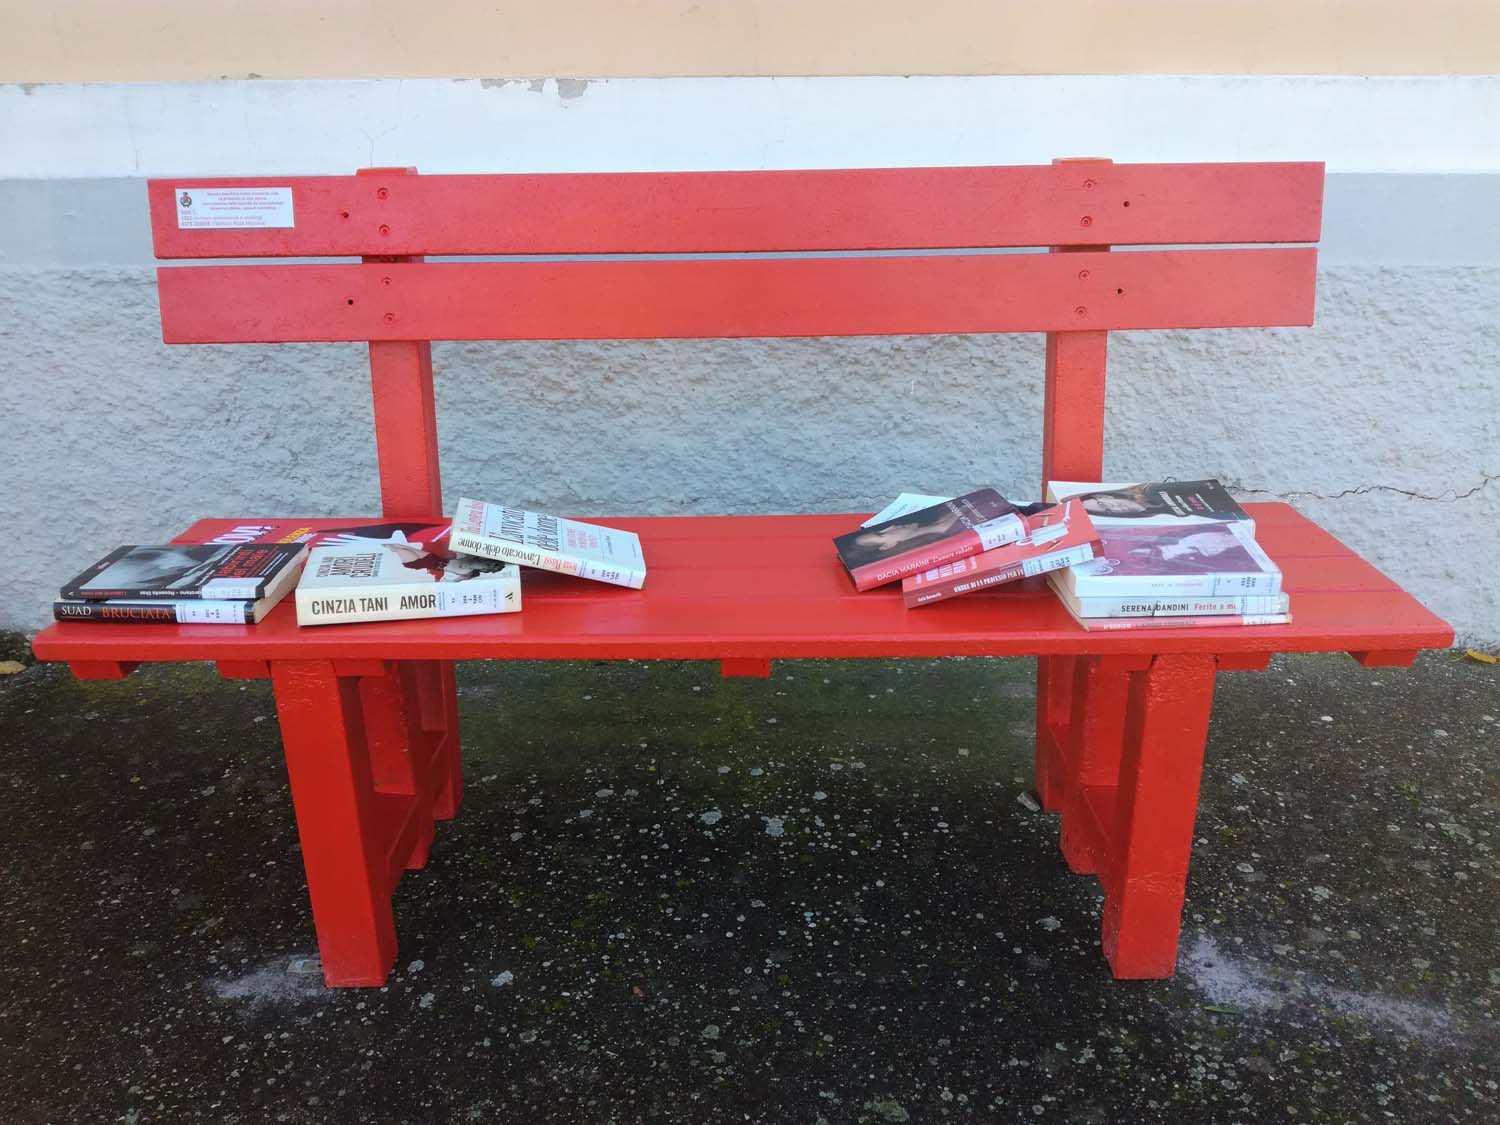 5_Panchina rossa con bibliografia e targa_light